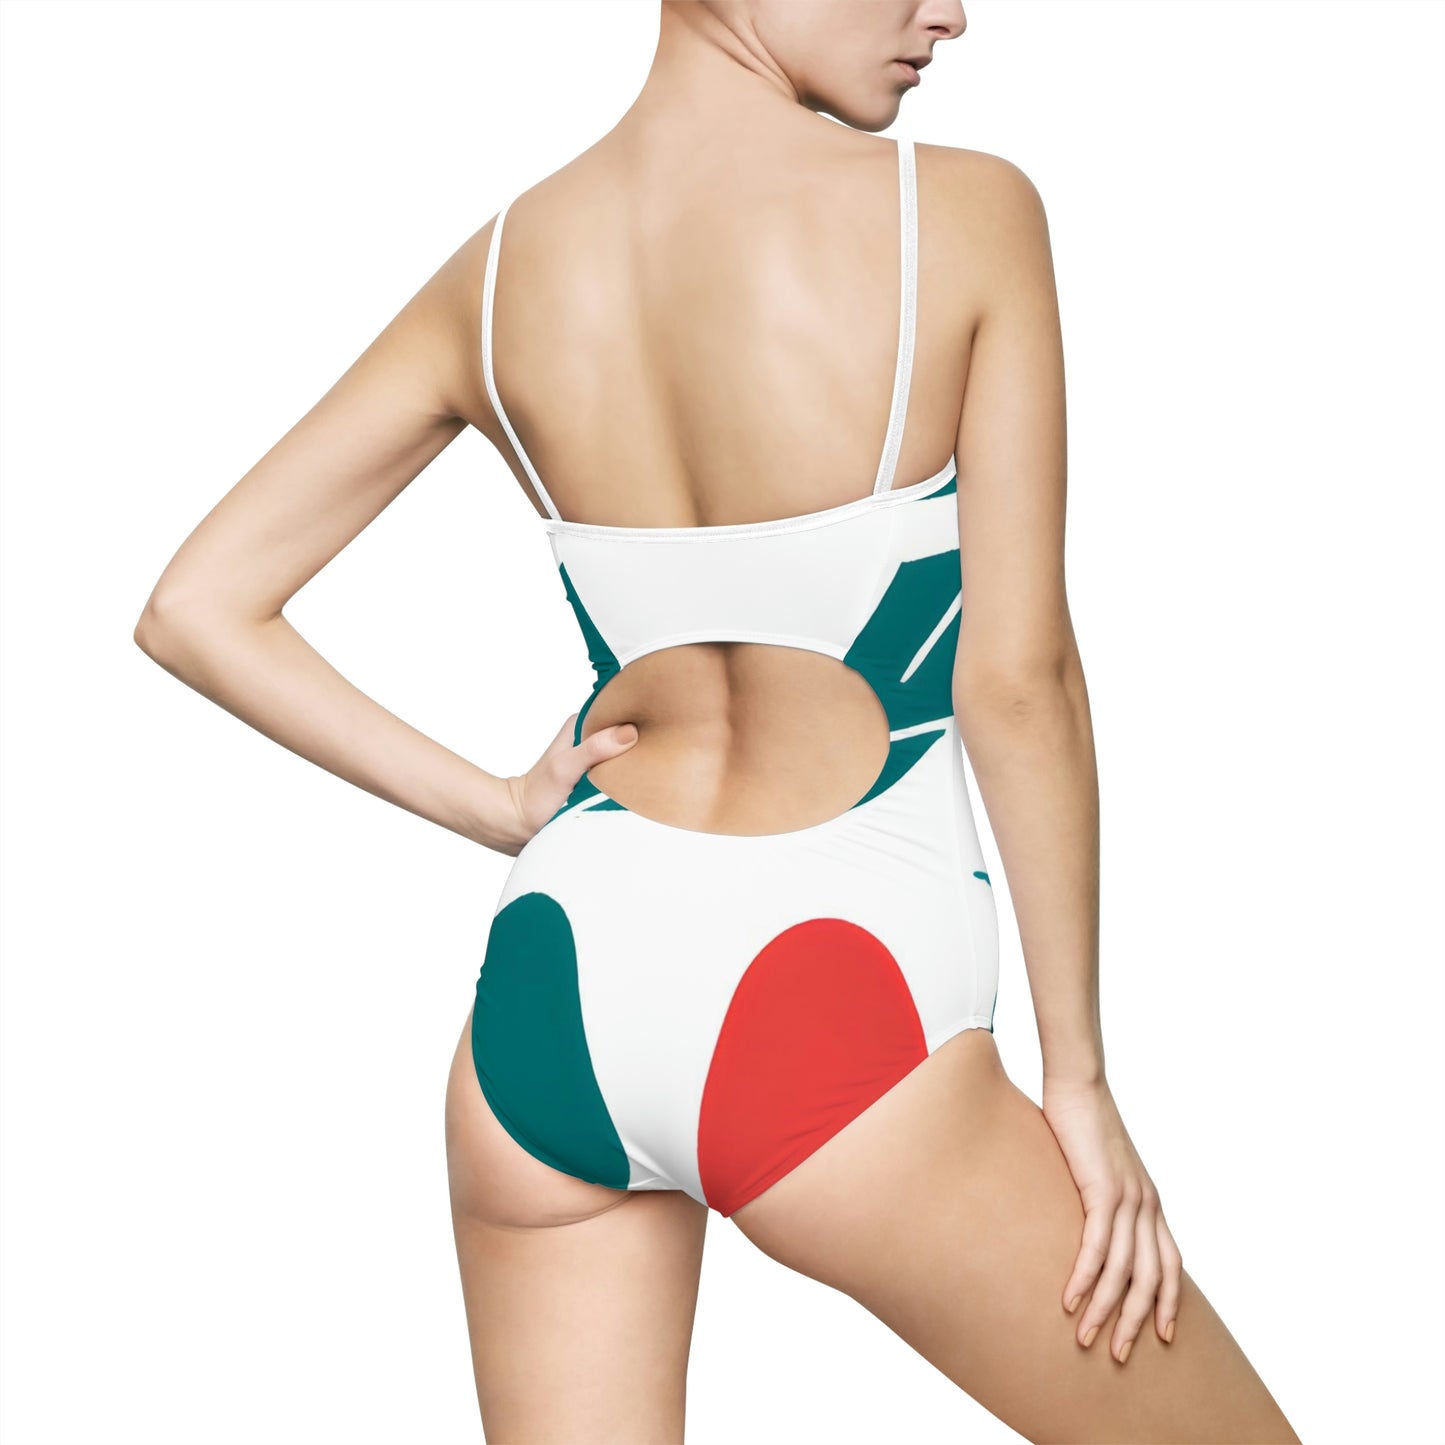 Gestura Lorene - Women's Classic One-Piece Swimsuit